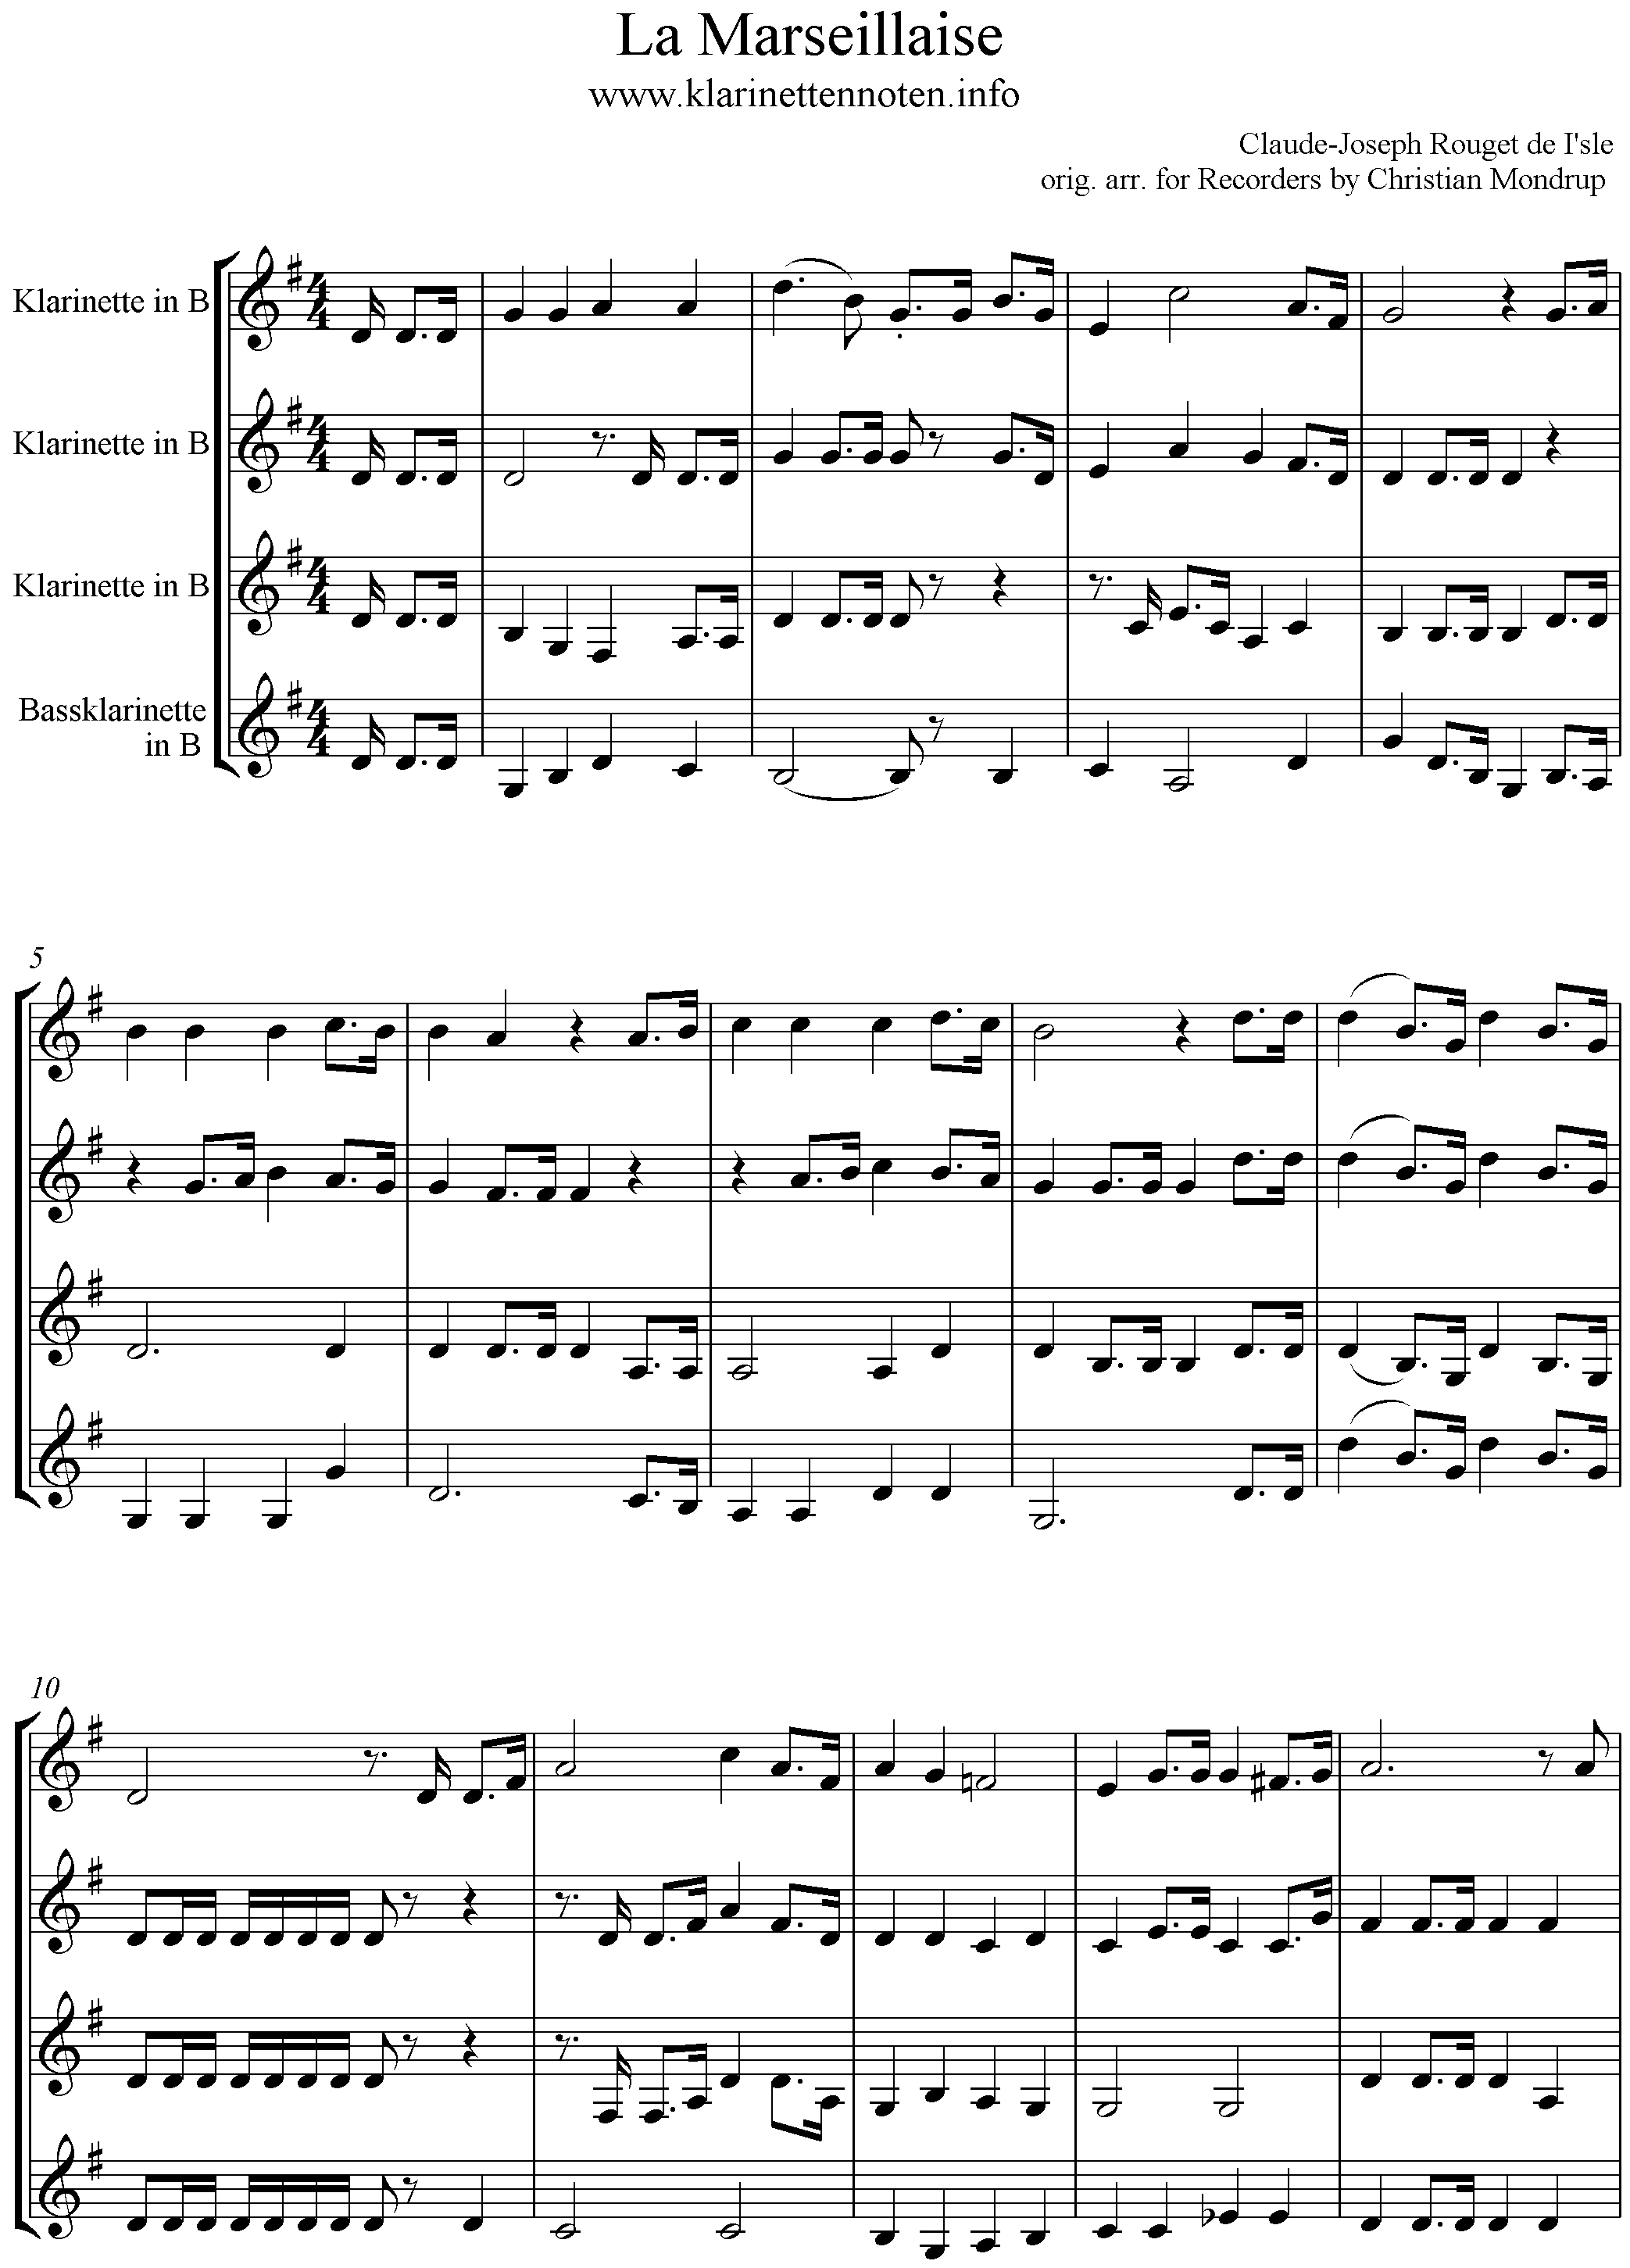 Quartet, G-Major, Clarinet, La Marseillaise, French Anthem